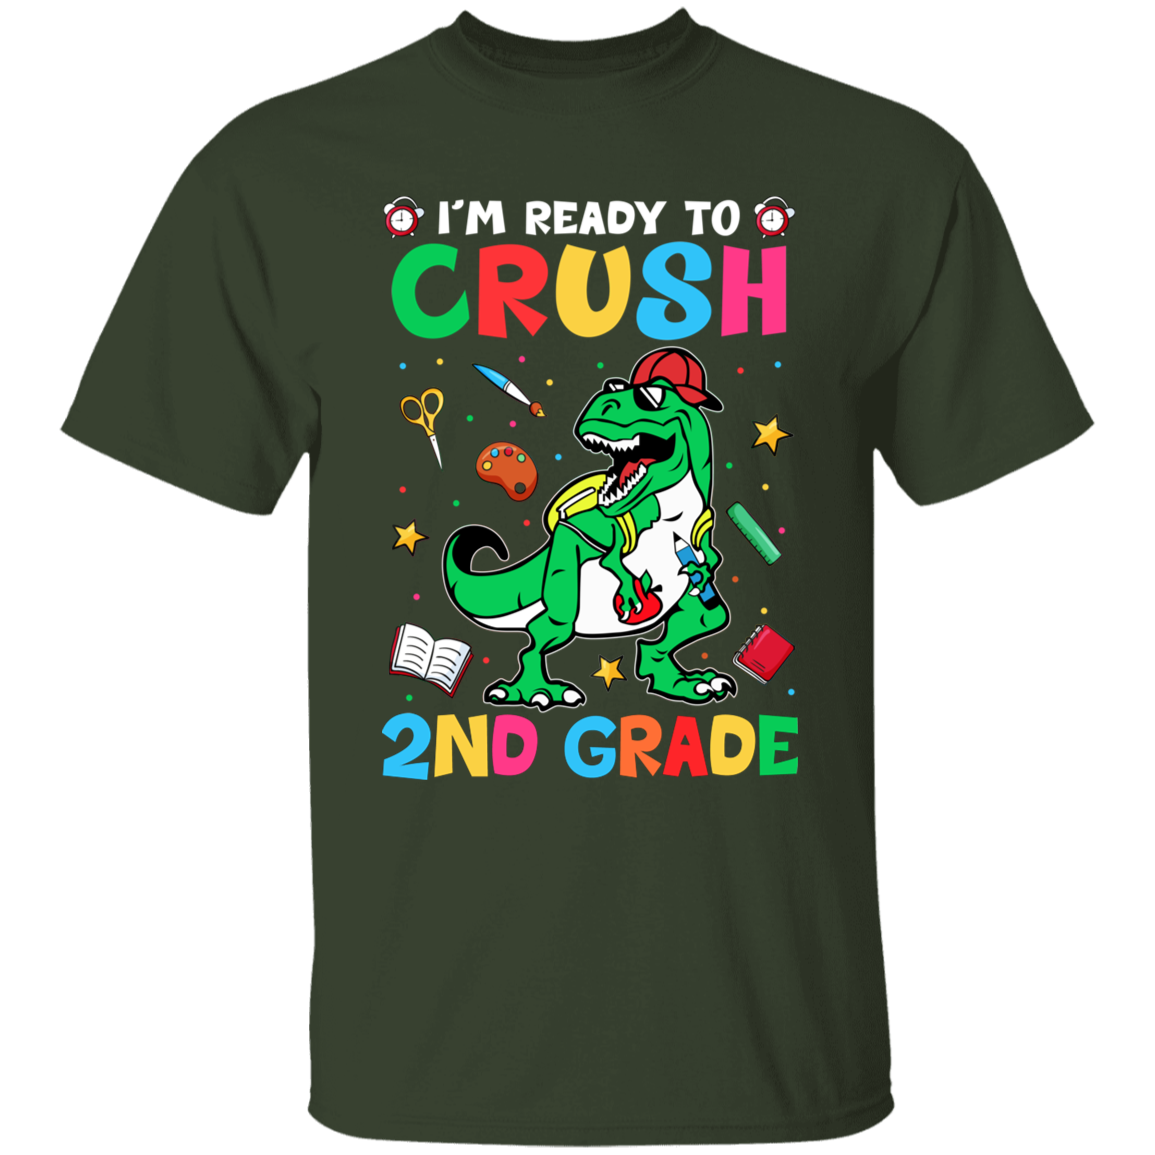 I'm Ready to Crush 2nd Grade Youth Cotton T-Shirt